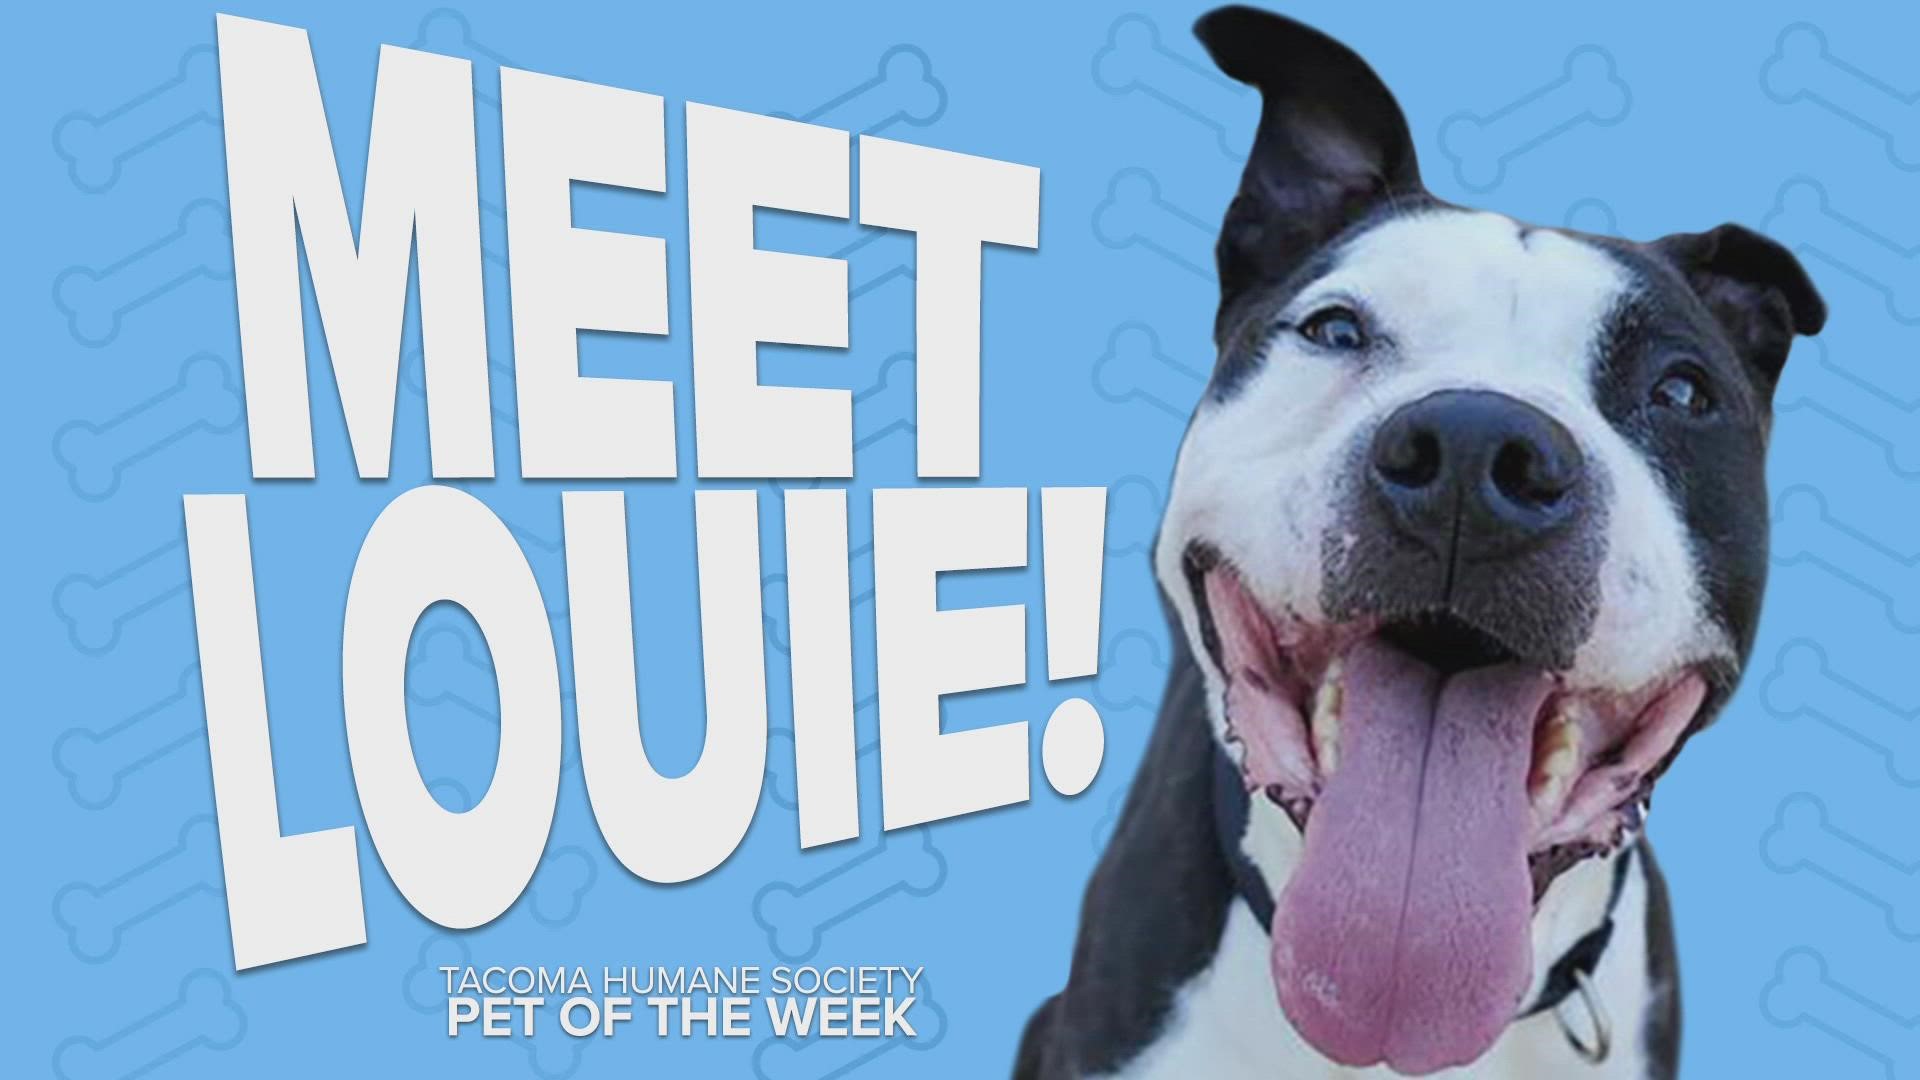 This week's featured adoptable pet of the week is Louie!